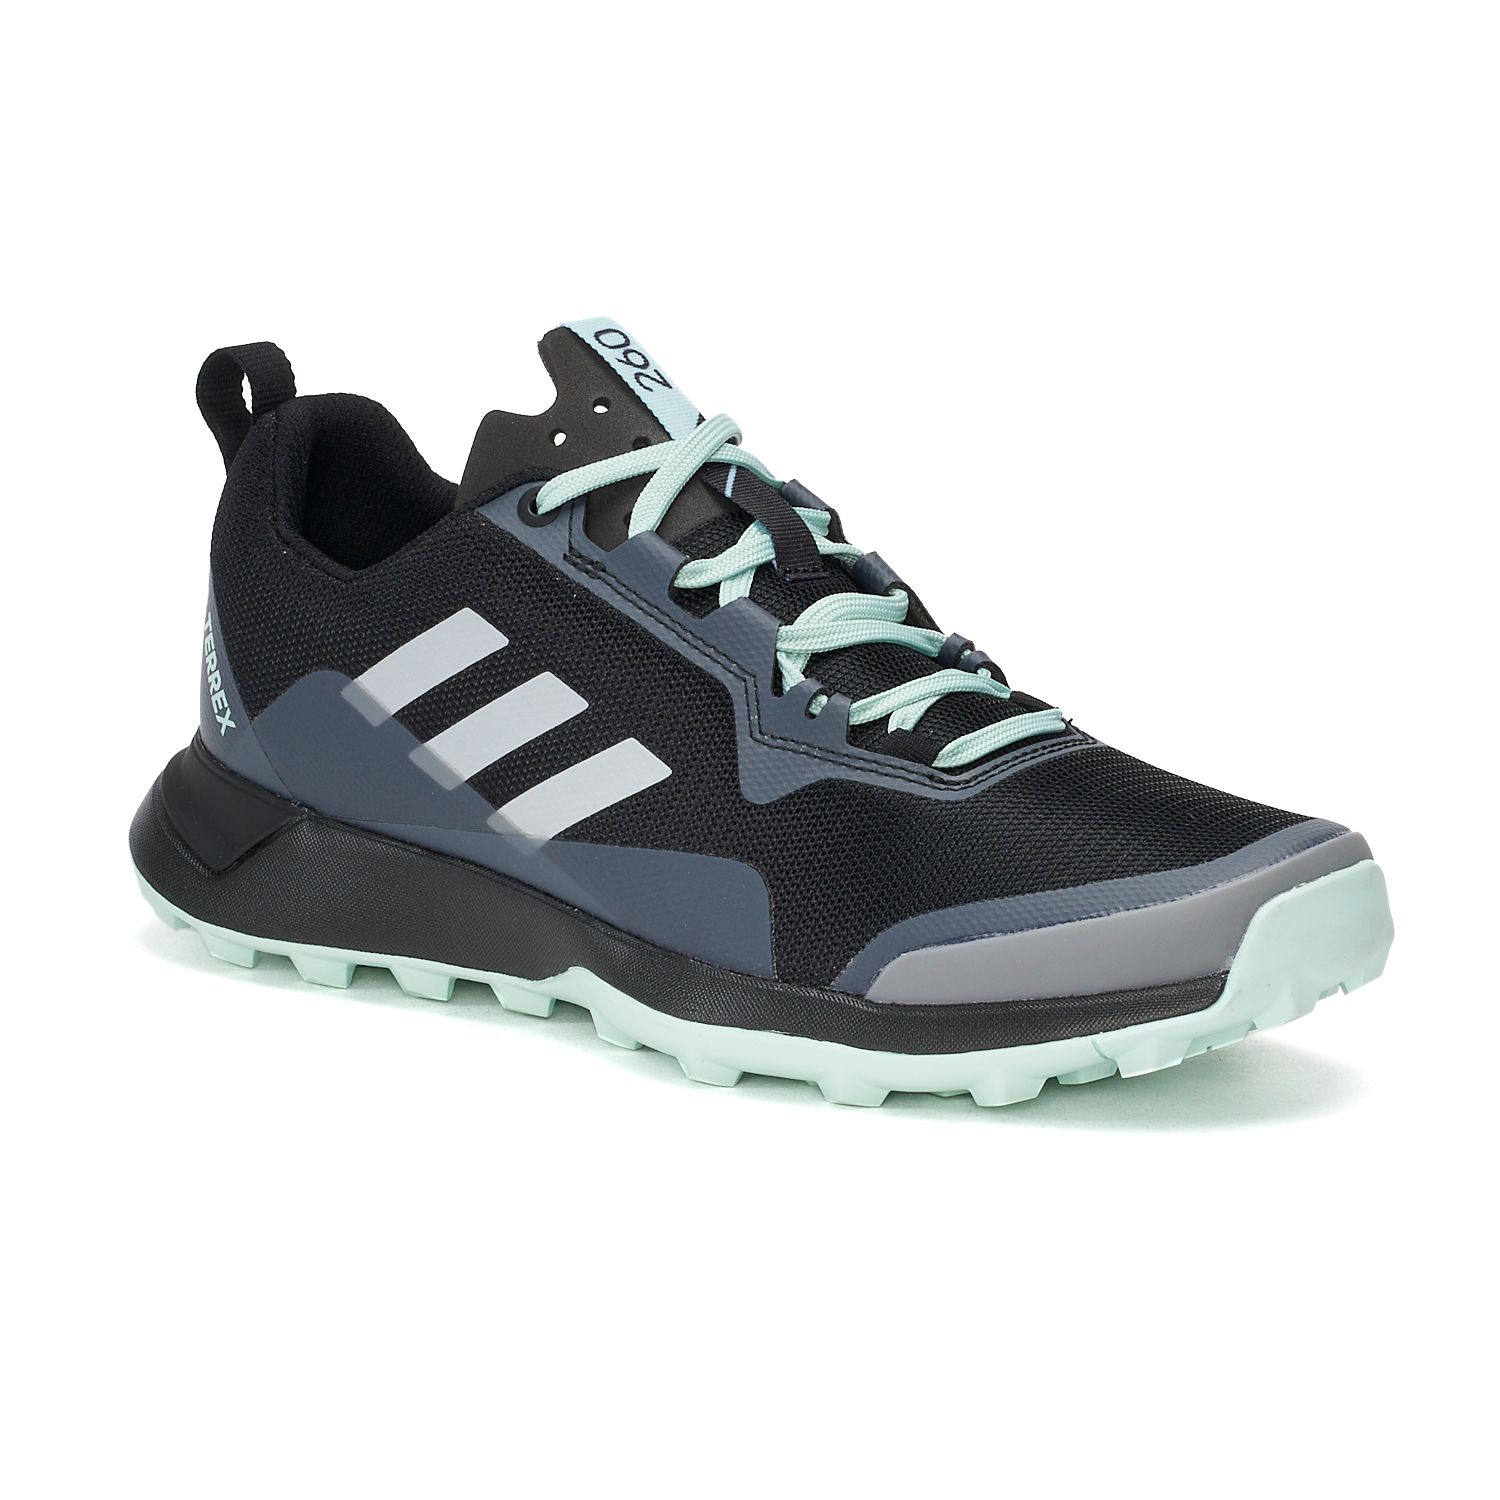 adidas terrex cmtk trail running shoes